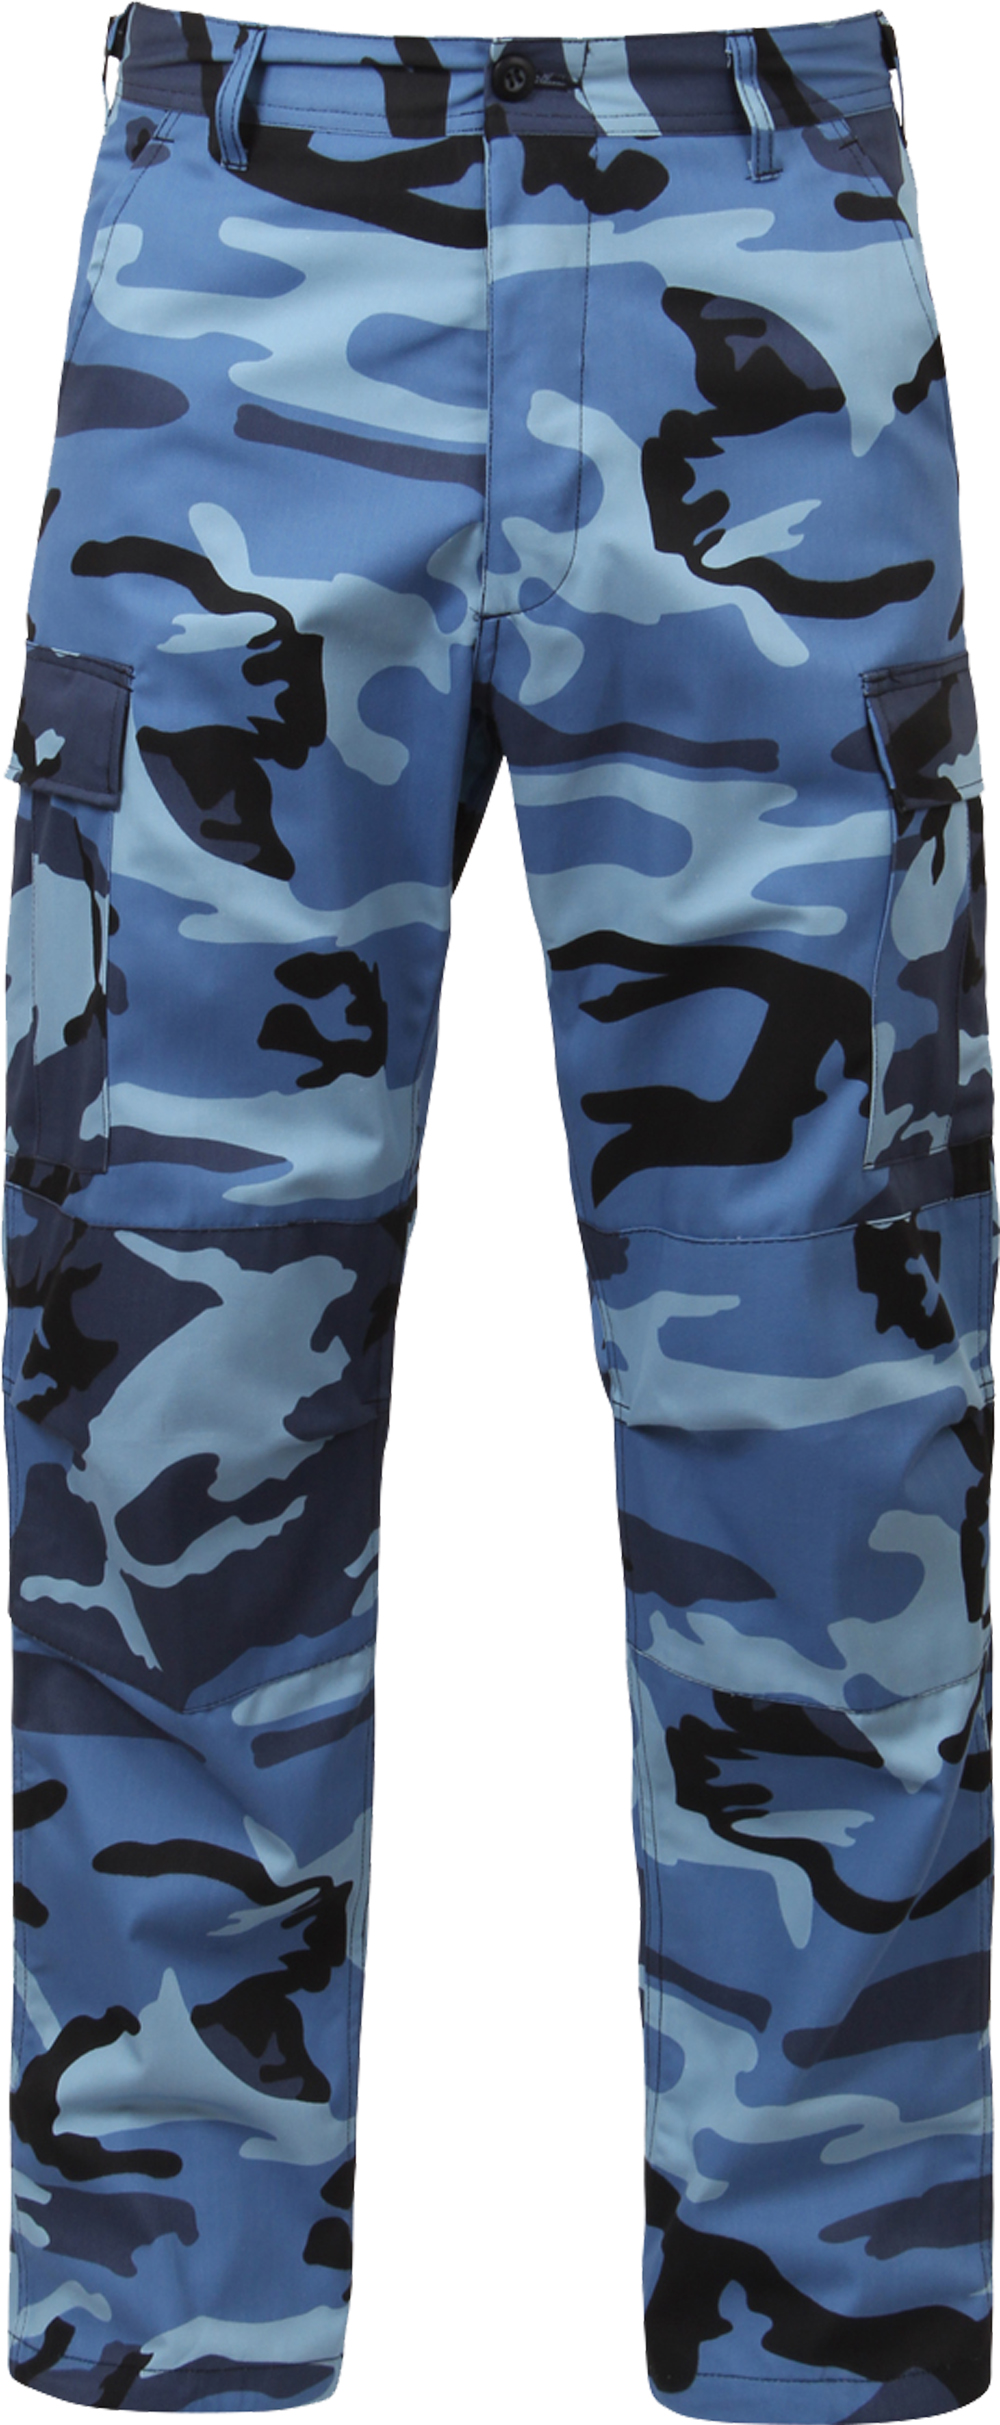 Rothco Sky Blue Camouflage Military Cargo BDU Fatigue Pants 